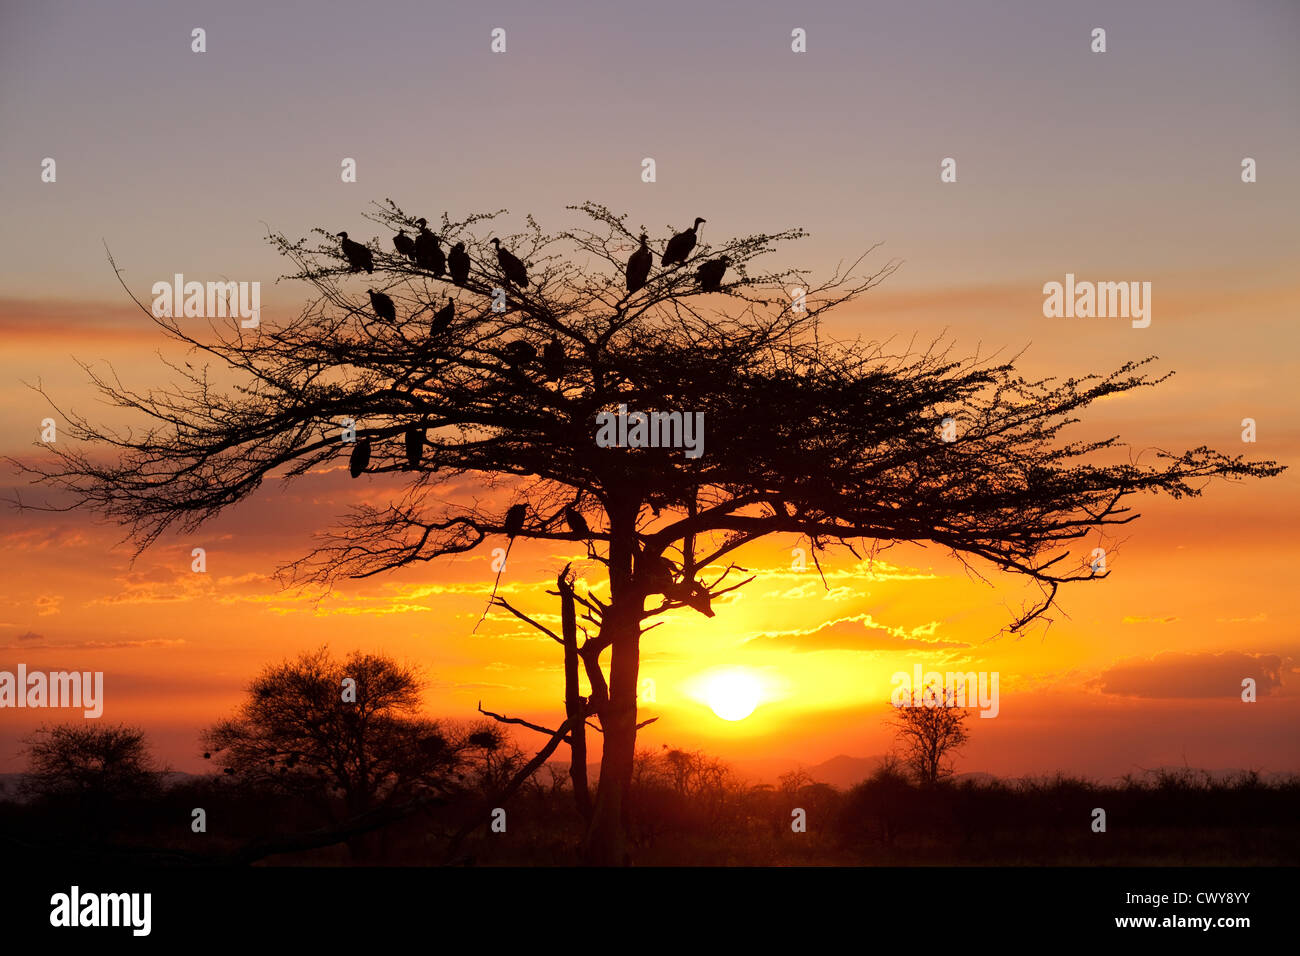 Afrikanischer Sonnenuntergang mit Geiern Vögel in Akazienbaum, Selous Game Reserve Tansania, Afrika Stockfoto